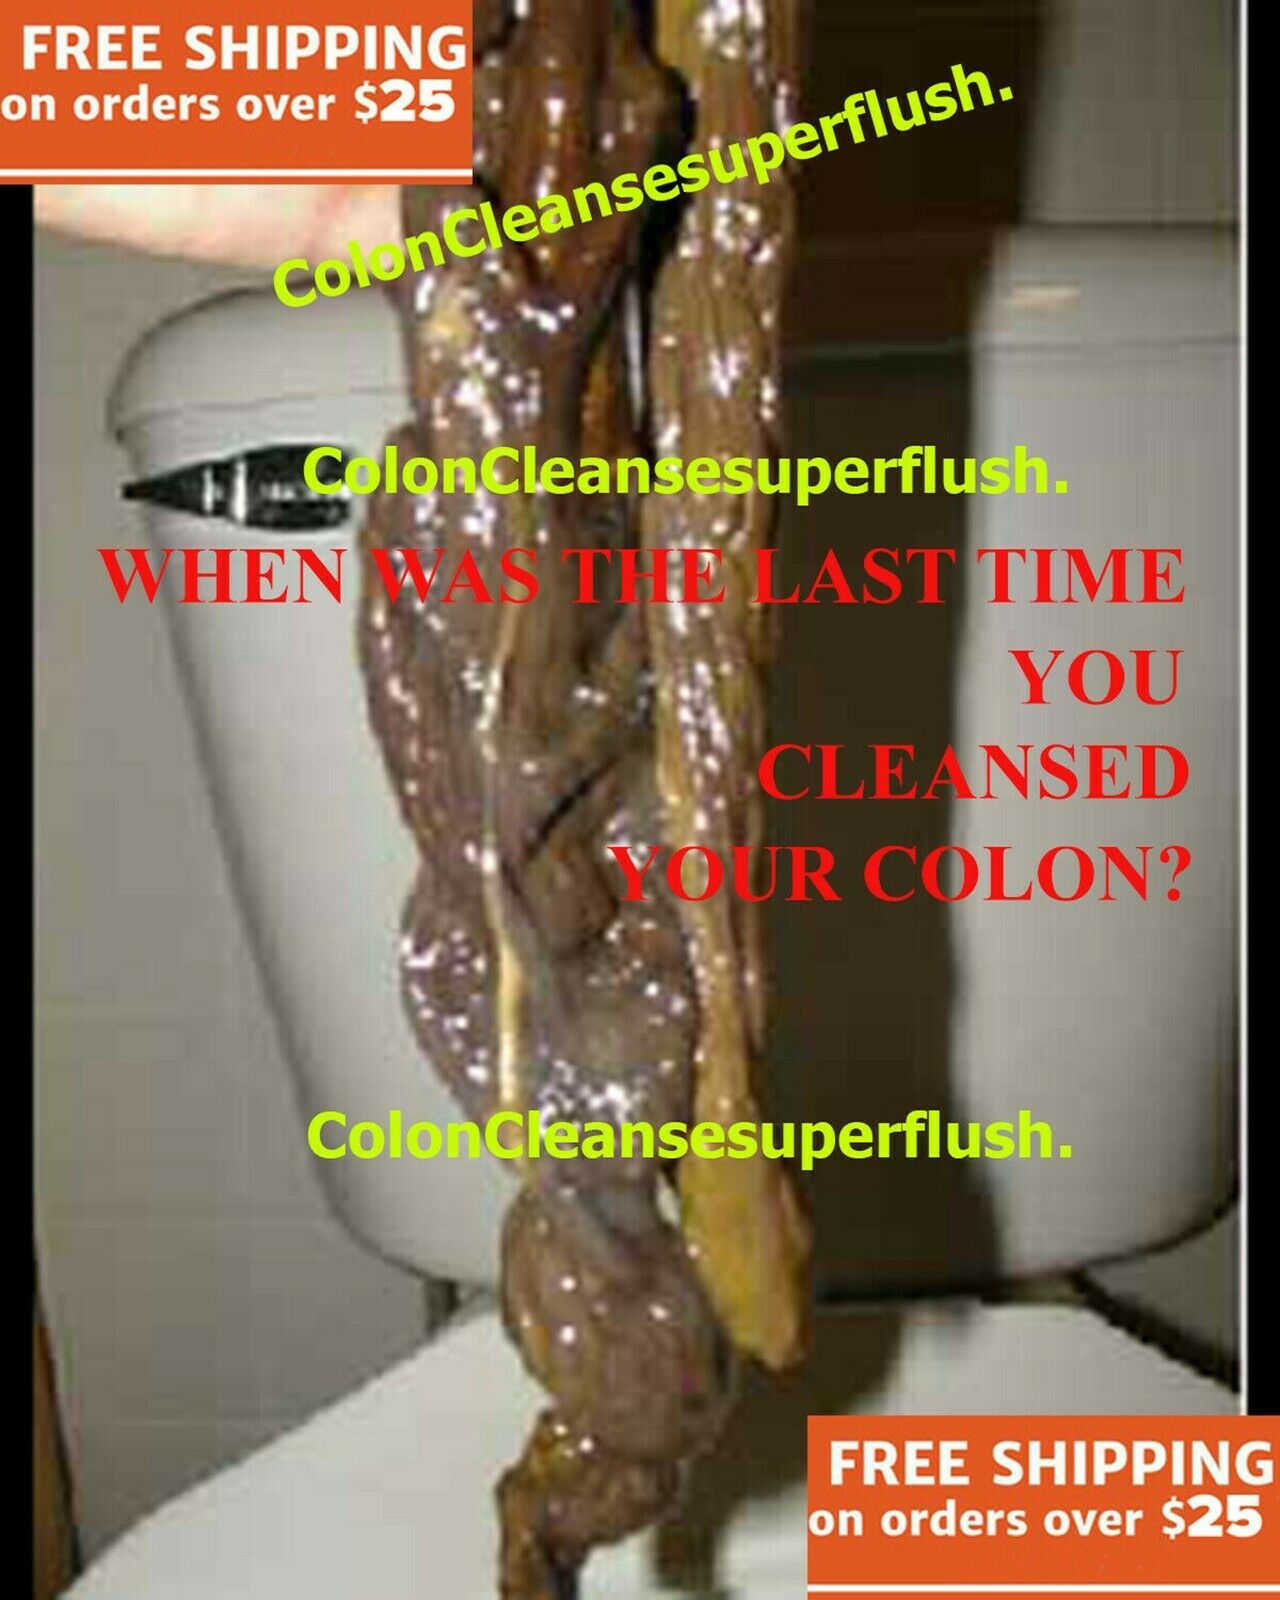 Colon Cleanse Super Flush All Organic Herbs Flush Pounds Lose Weight Detox Sebi